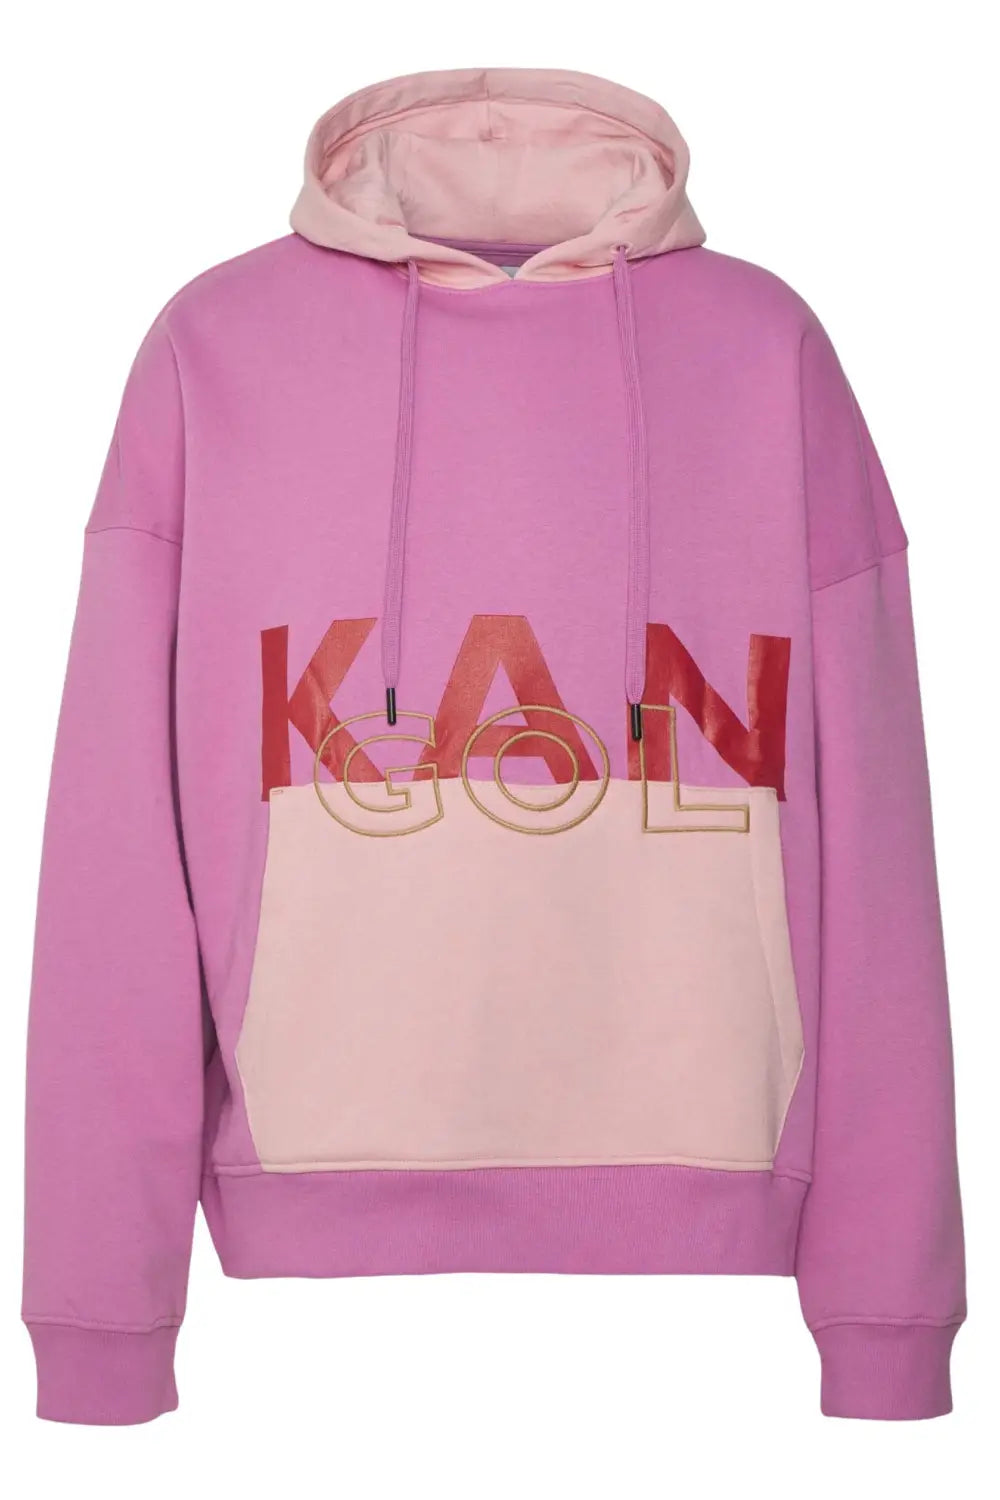 Kangol Organic Cotton Hoodie Sweatshirt